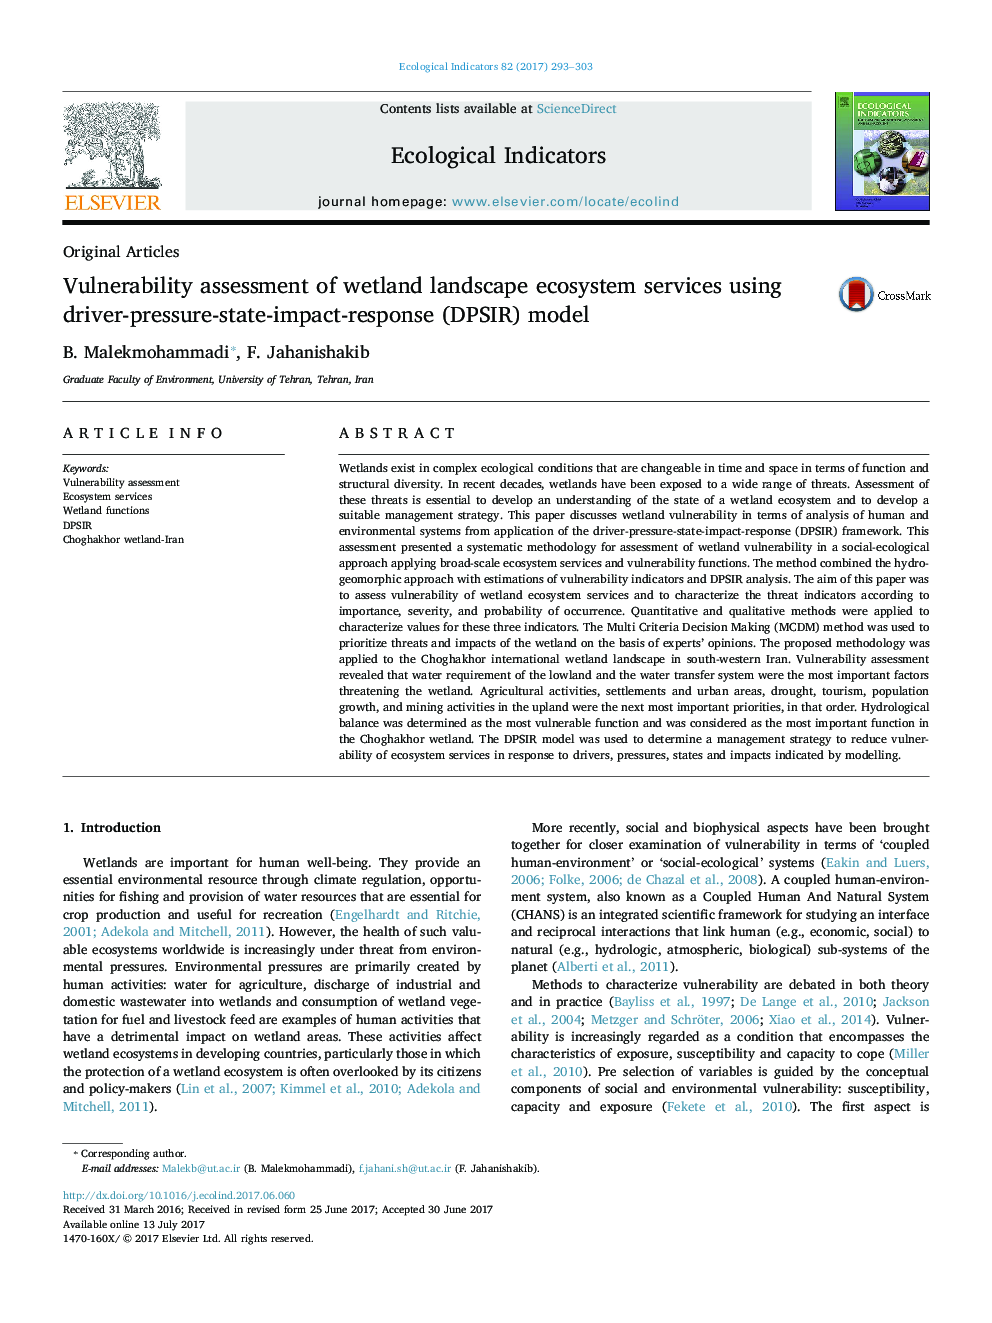 Original ArticlesVulnerability assessment of wetland landscape ecosystem services using driver-pressure-state-impact-response (DPSIR) model